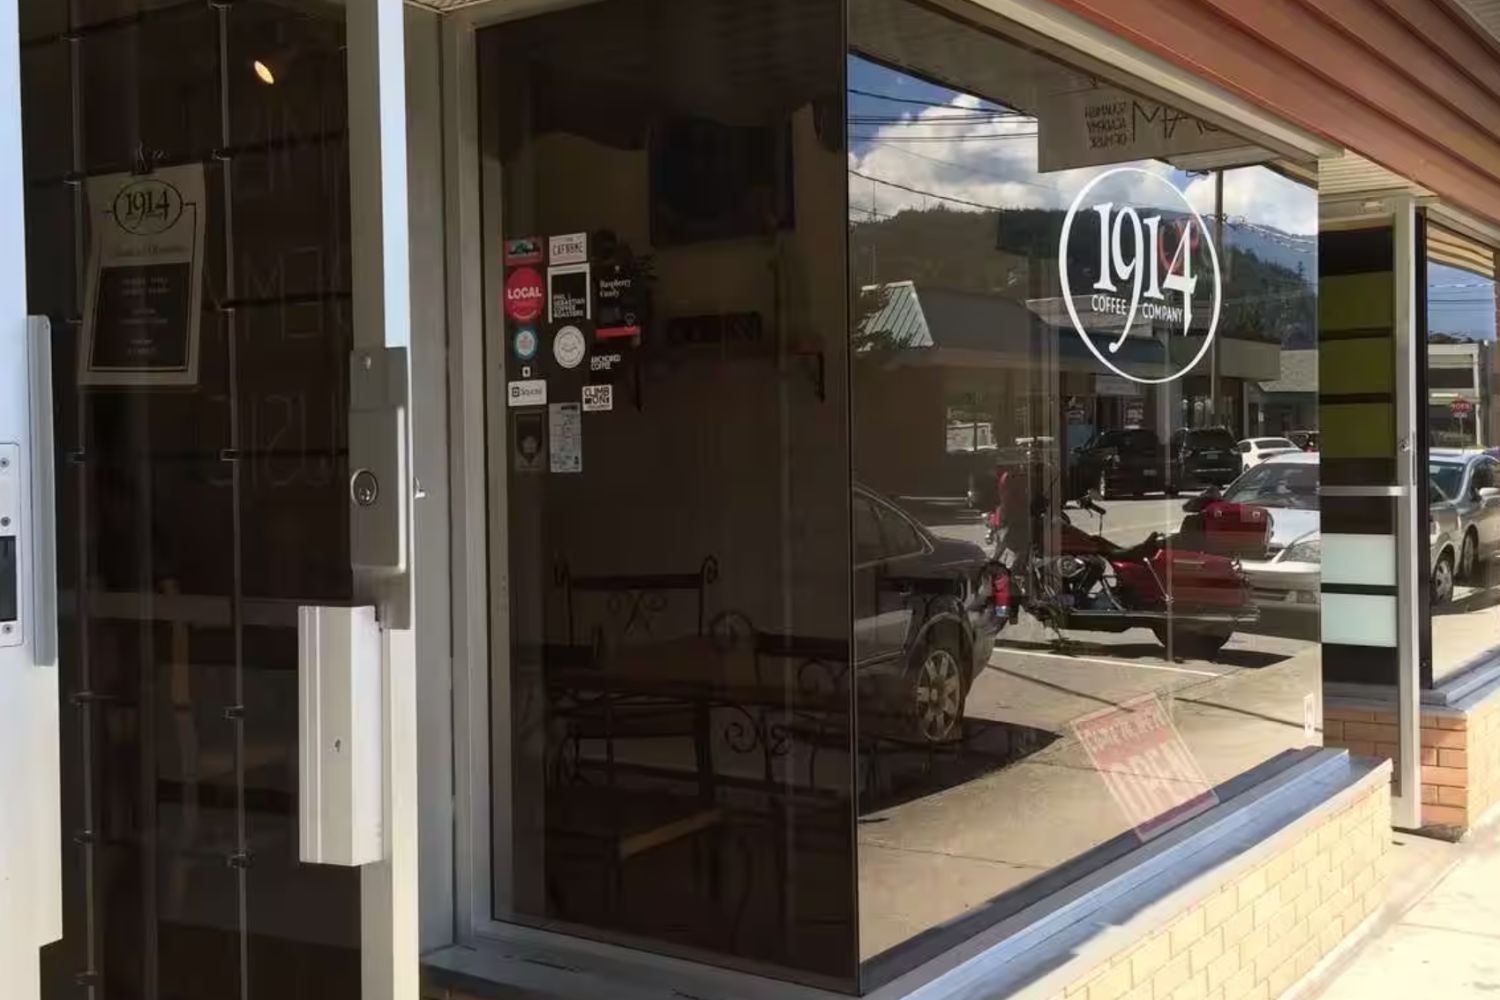 https://www.downtownsquamish.com/wp-content/uploads/2015/06/1914-coffee-storefront-1500x1000-1.jpeg